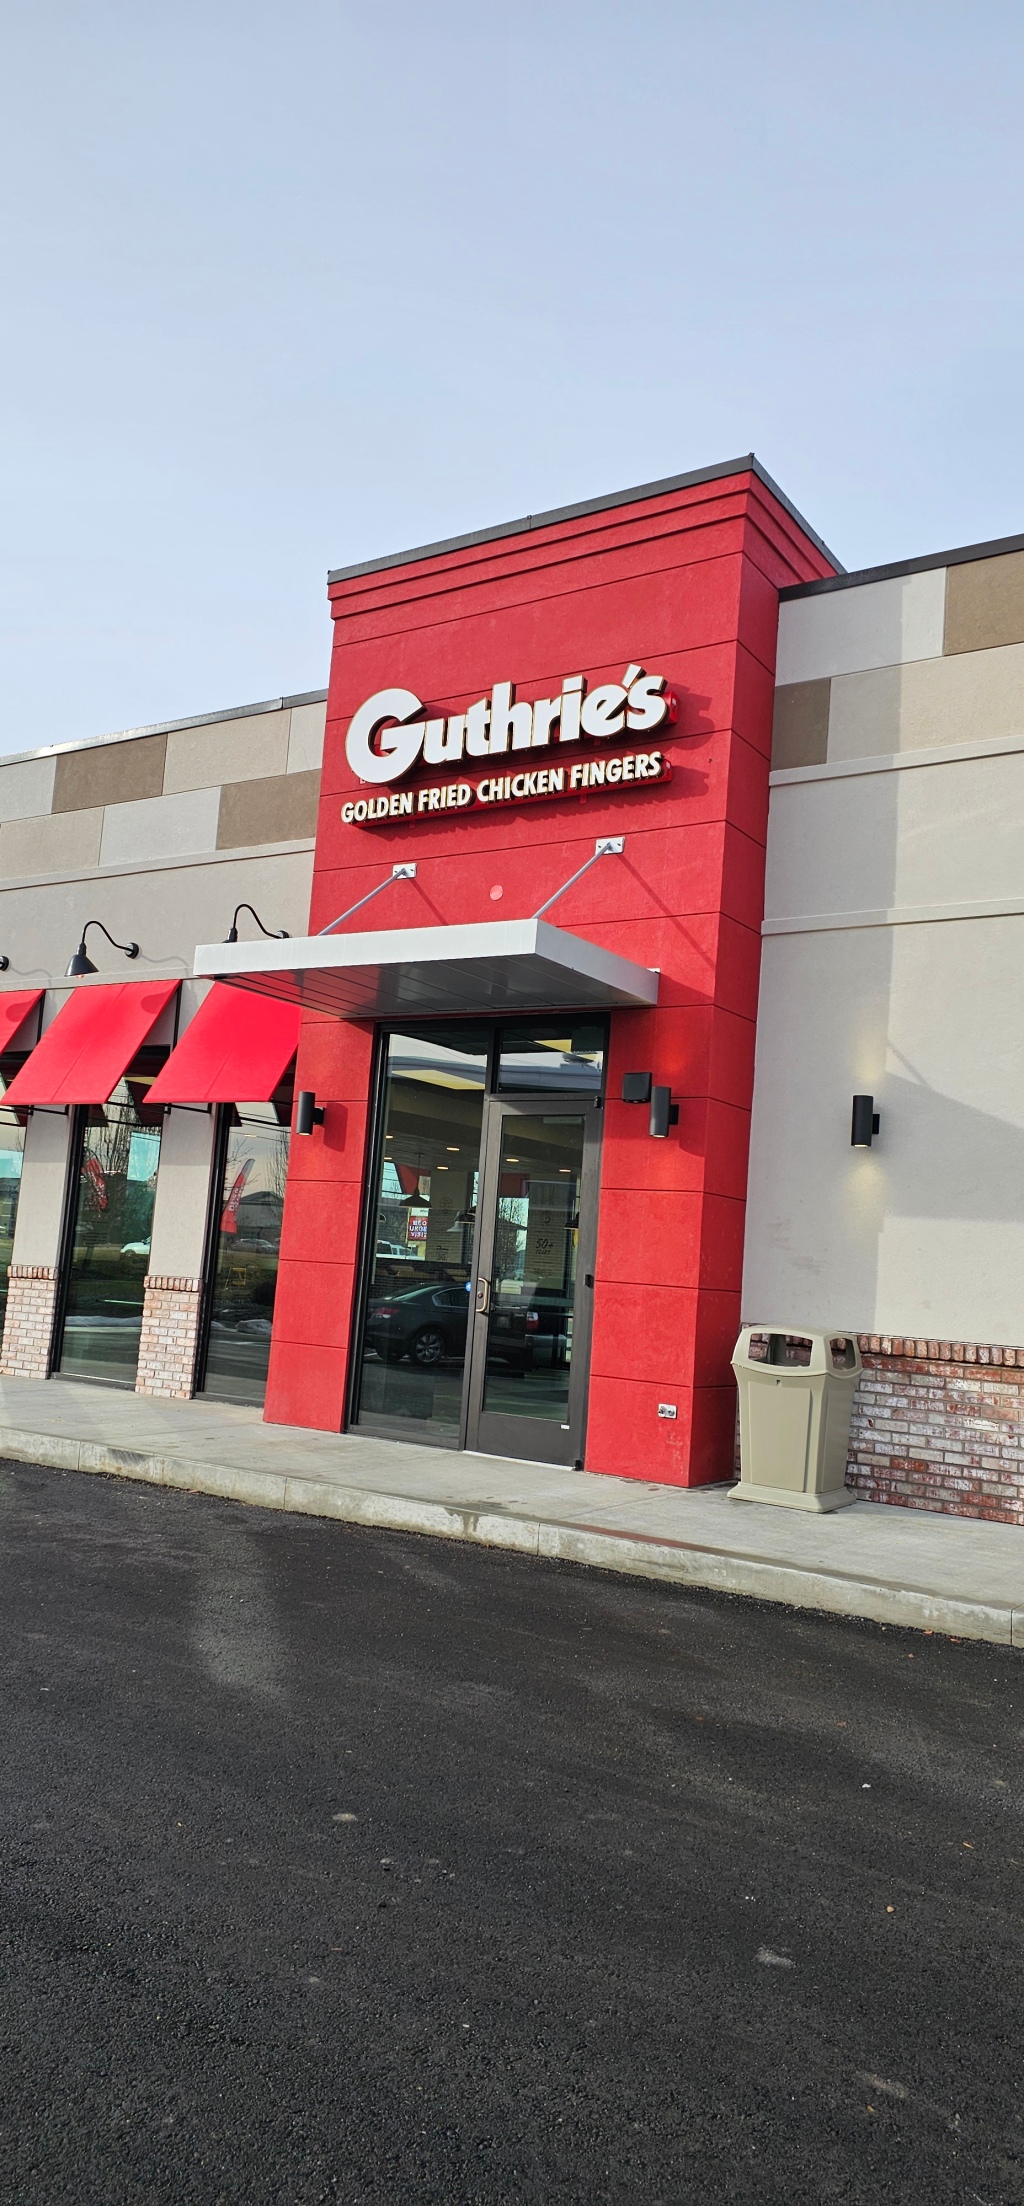 Guthrie’s Golden Fried Chicken Fingers Opens In Idaho